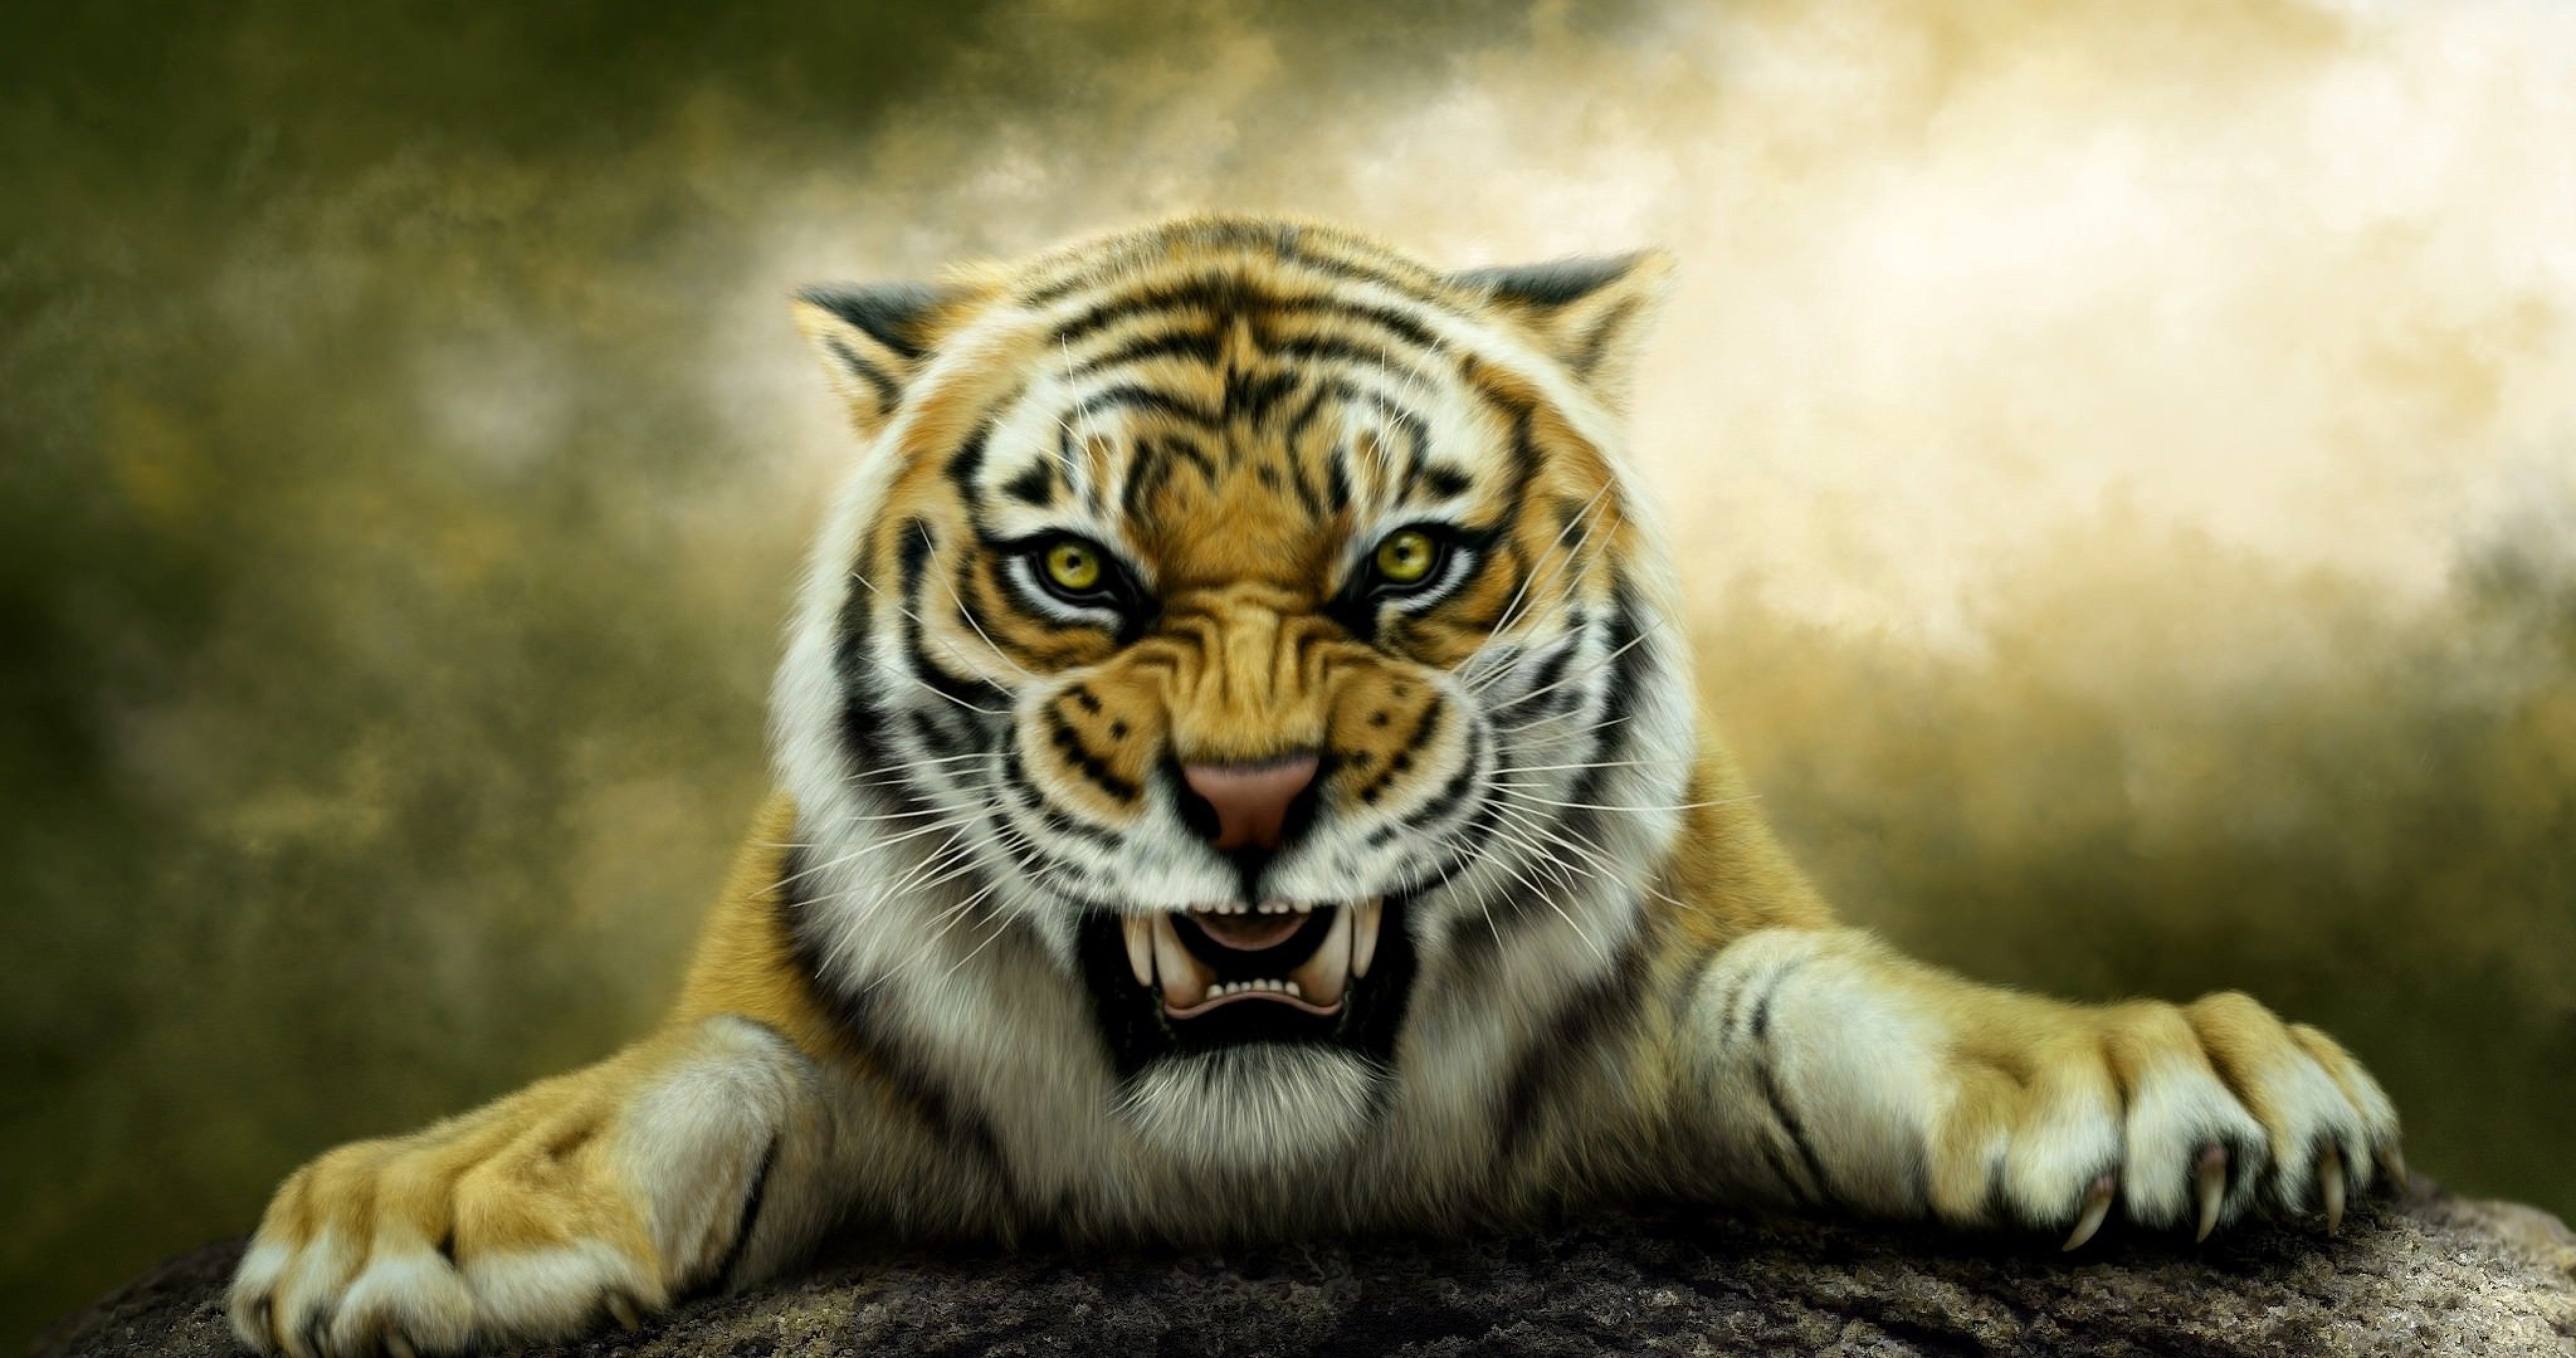 tiger photohop 4k ultra HD wallpaper High quality walls